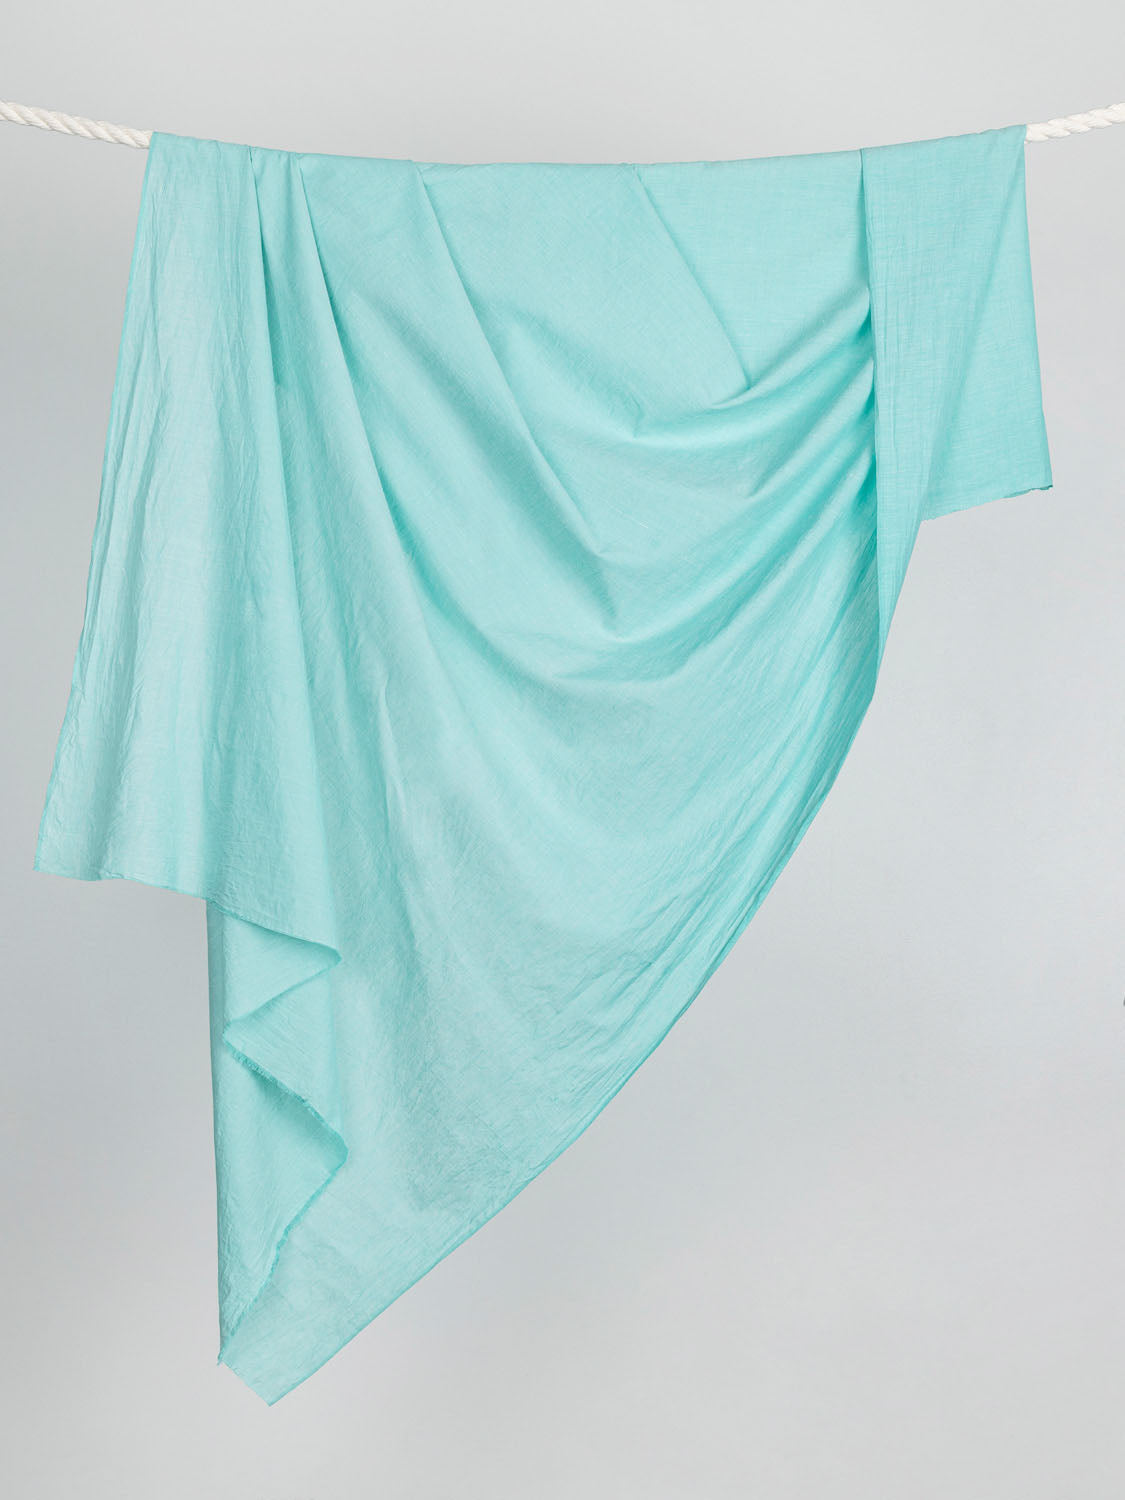 Yarn-Dyed Handwoven Khadi Cotton Chambray - Teal | Core Fabrics